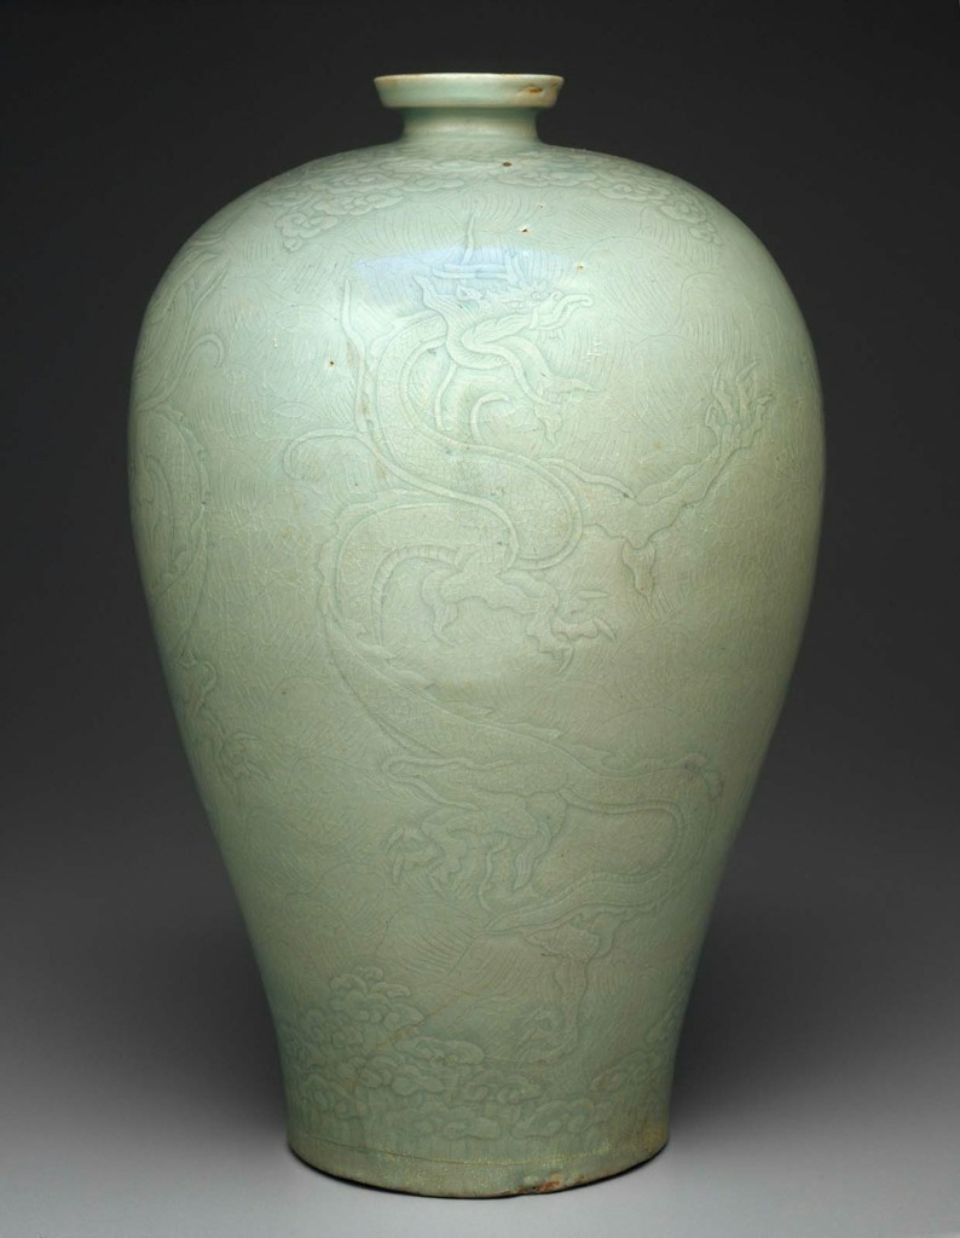 29 Perfect Goryeo Celadon Vase 2024 free download goryeo celadon vase of prunus vase with carved dragon ic2b2c2adic29ec290ic296c291ec281ic29aec2acc2b8ec2a7c2a4ec2b3c291 ec29dc291cc293c2b7ec299c2bdac288ec2be